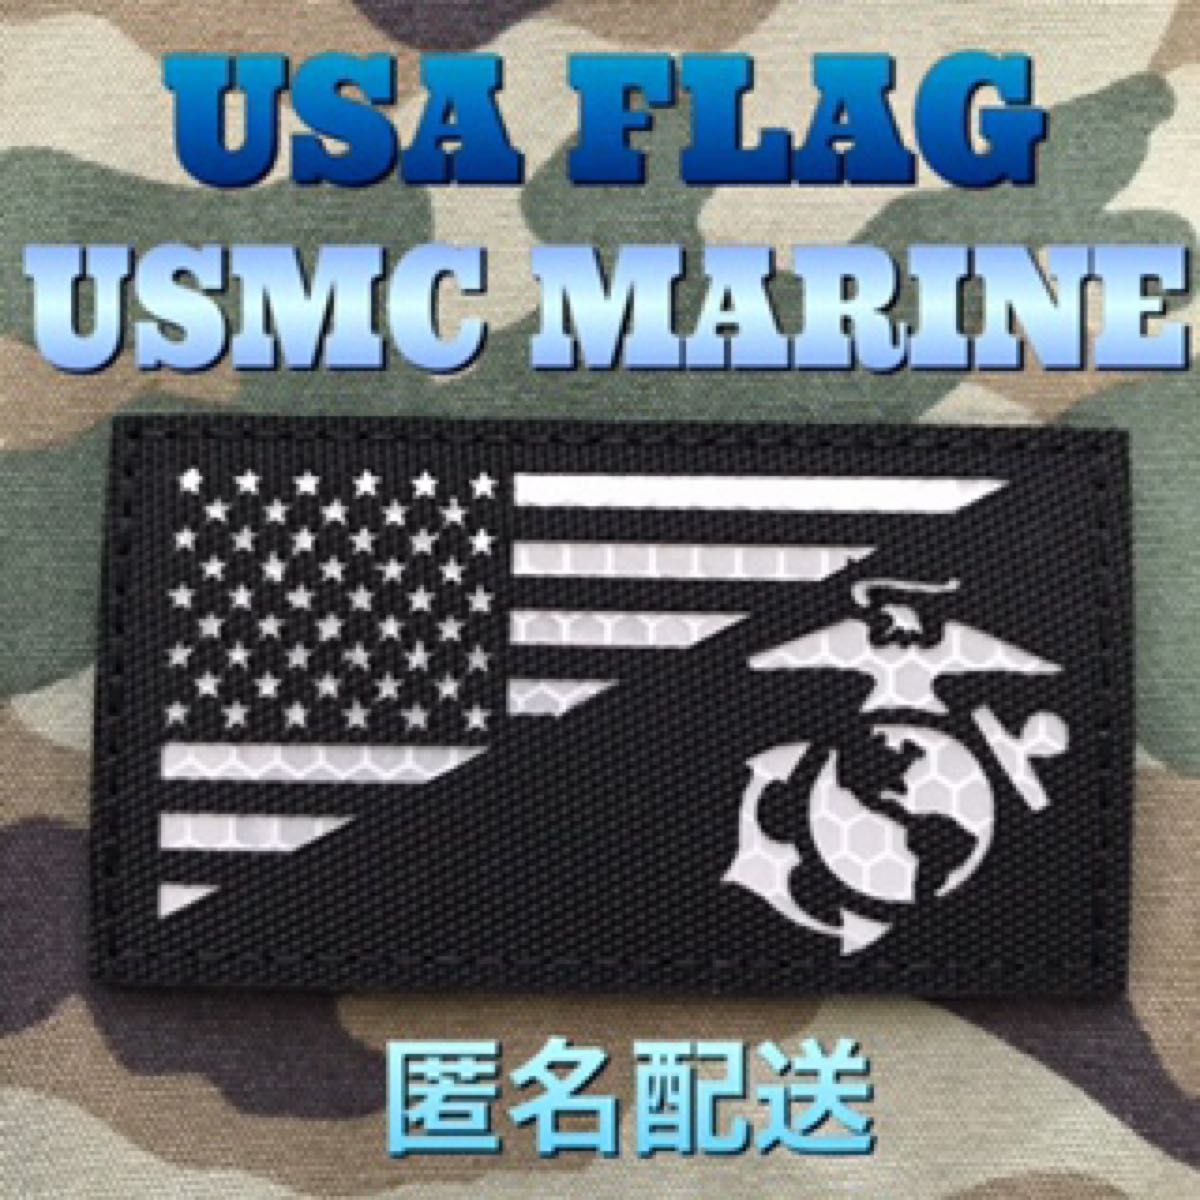 USA FLAG USMC MARINE  国旗 IR パッチ ワッペン 米軍 海軍 海兵隊 マリーン 星条旗 サバゲー リメイク